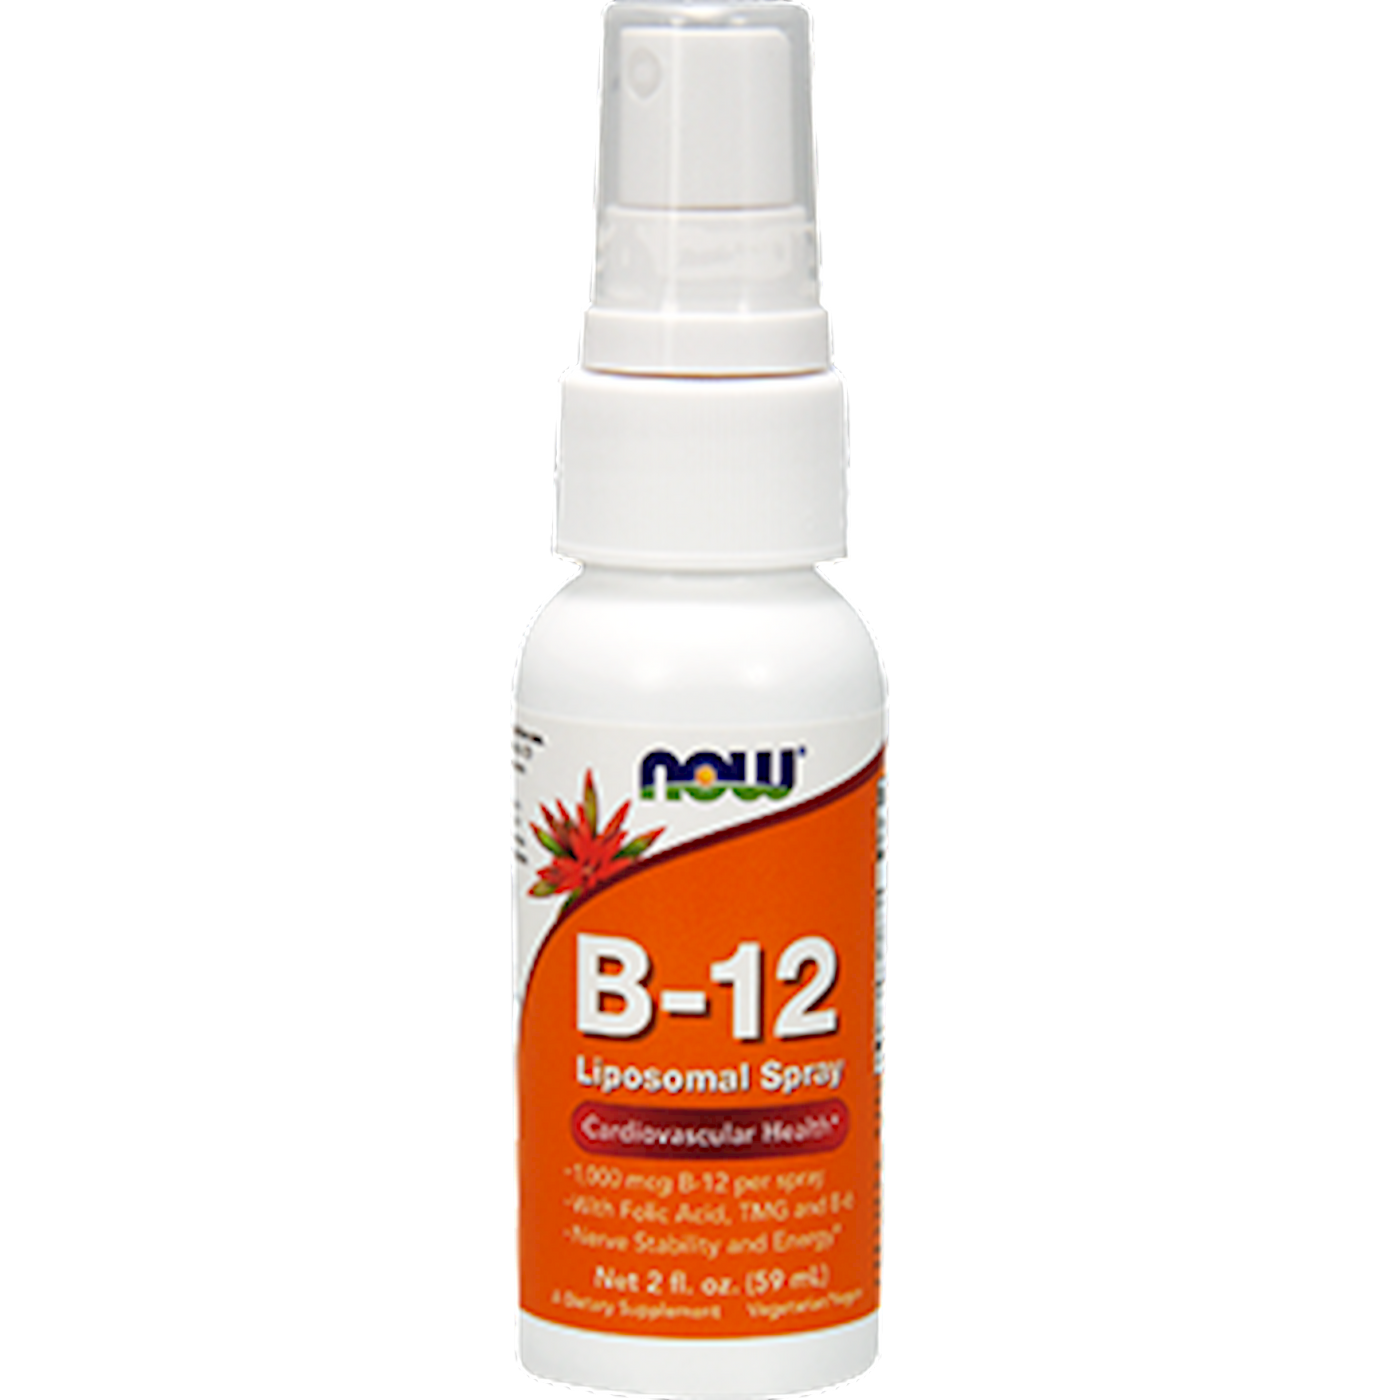 B-12 Liposomal Spray 1000 mcg 2 fl oz Curated Wellness